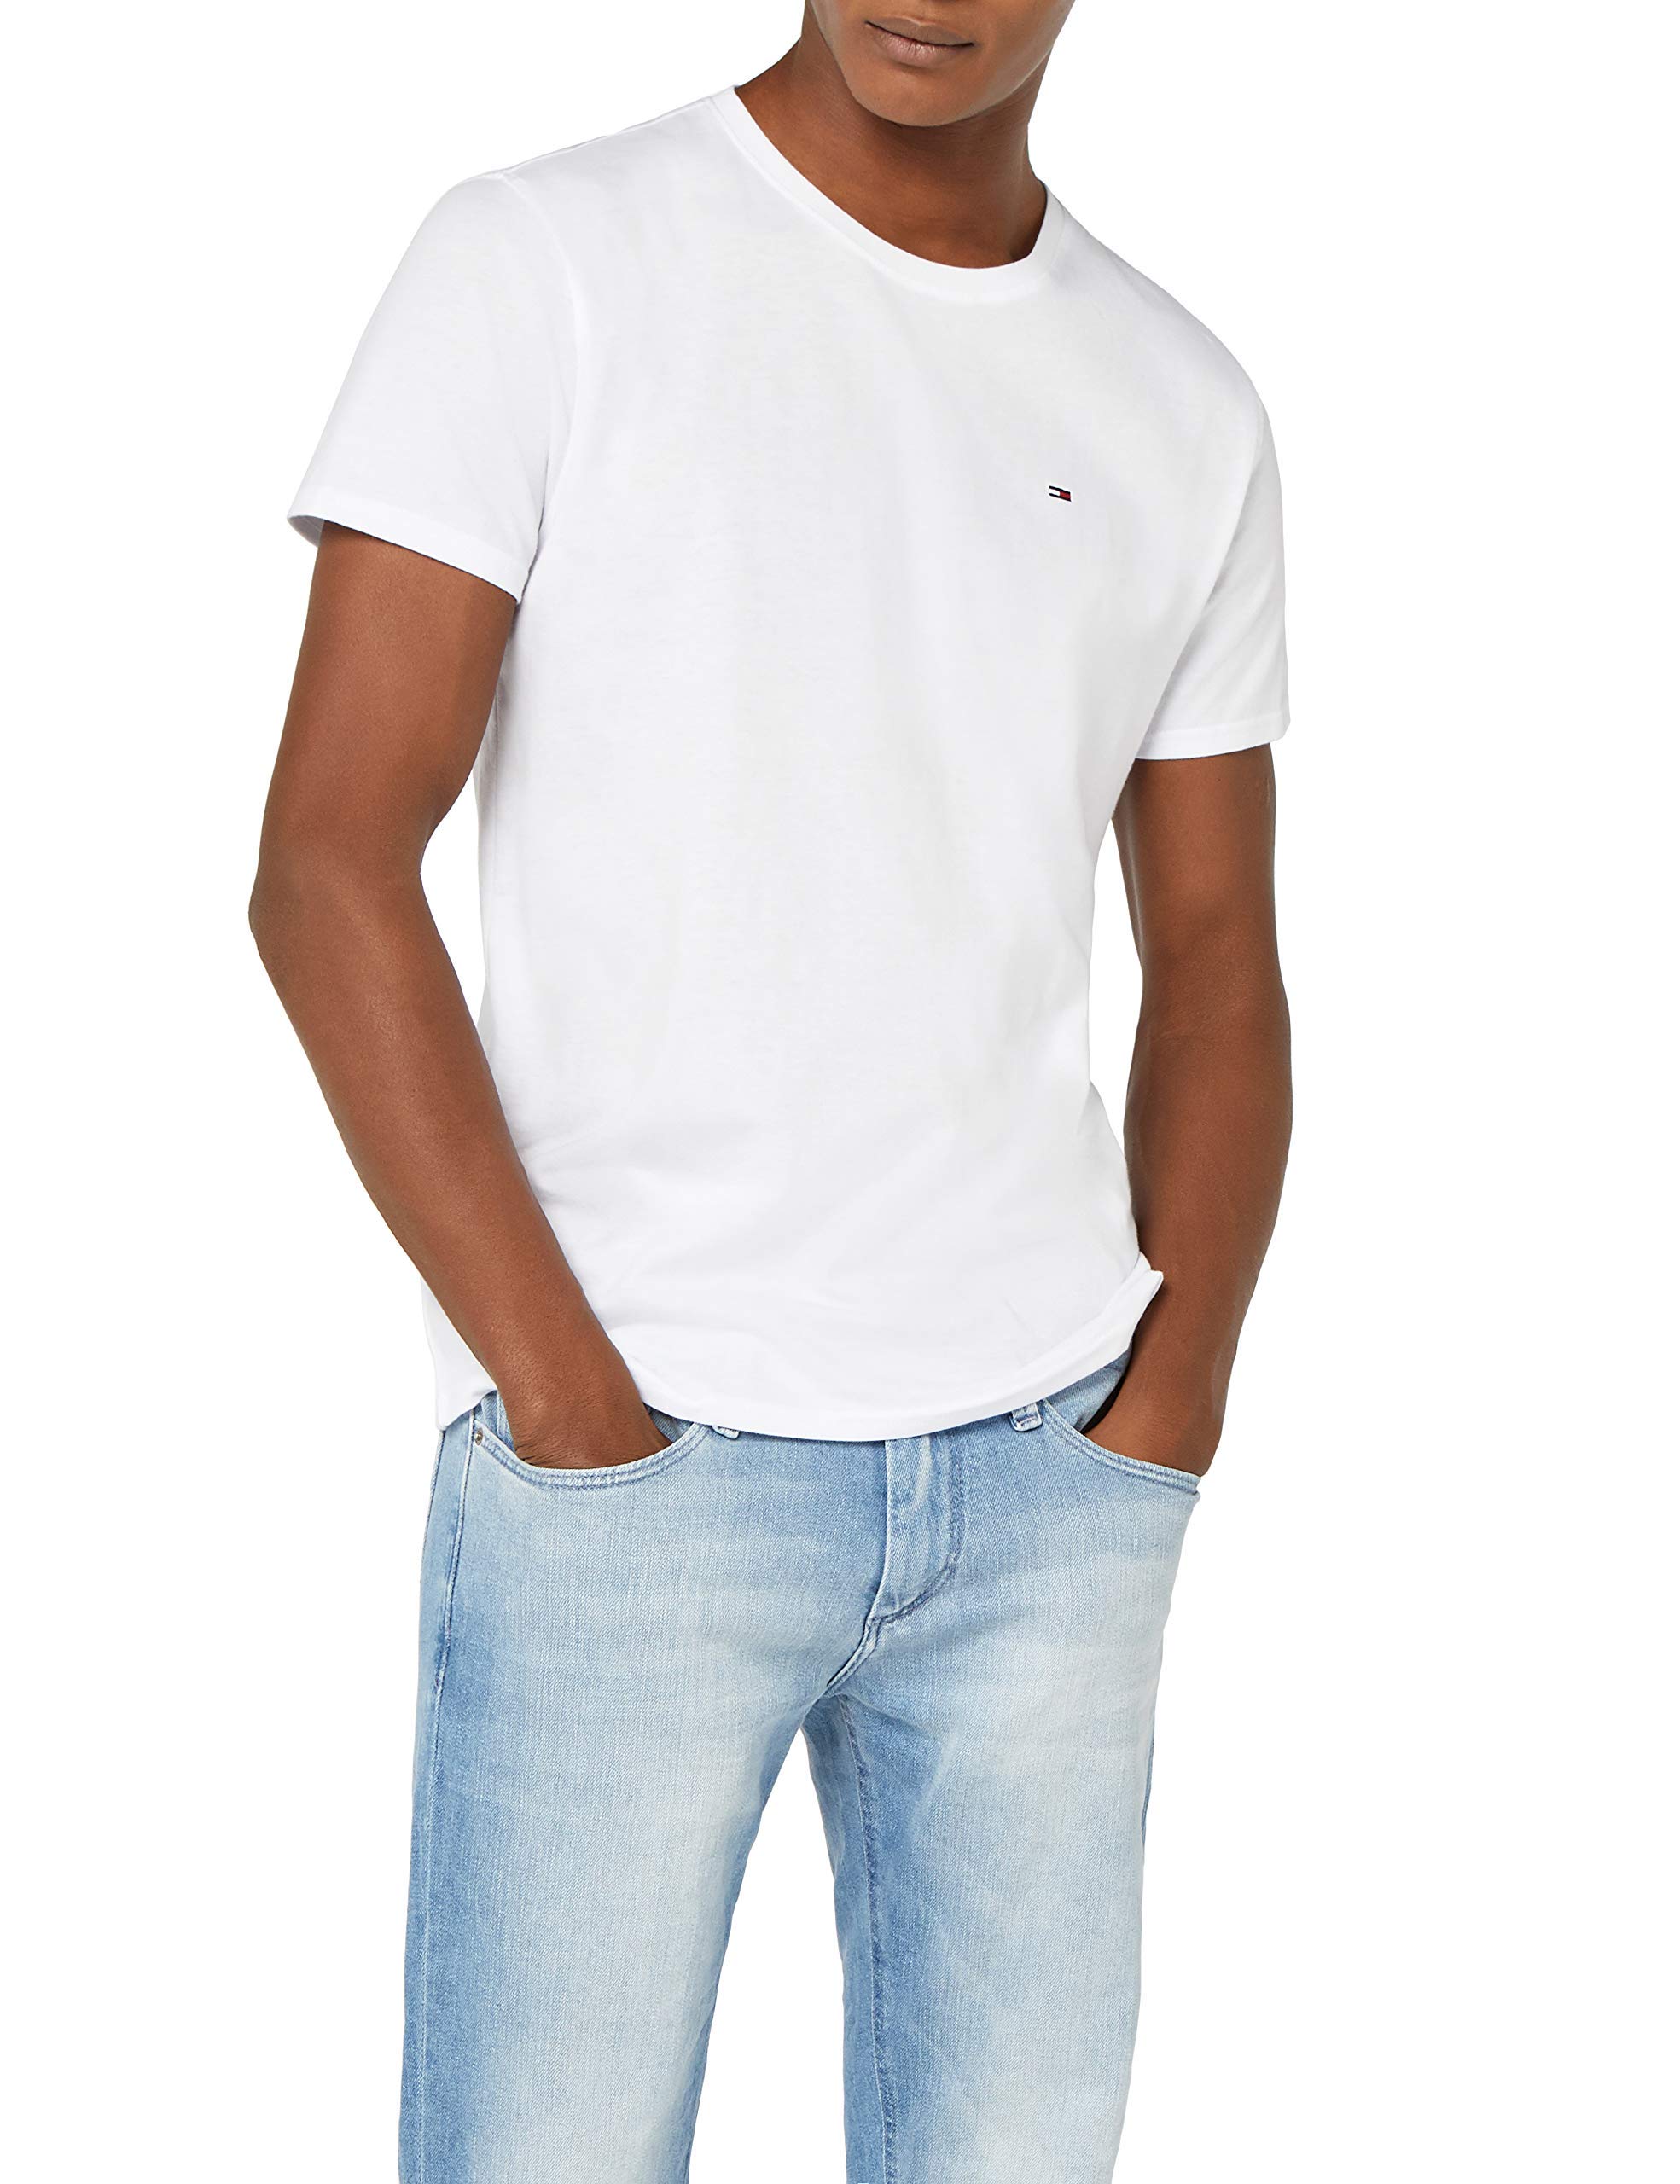 Tommy Hilfiger T-Shirt Herren Kurzarm TJM Original Slim Fit, Weiß (Classic White), S